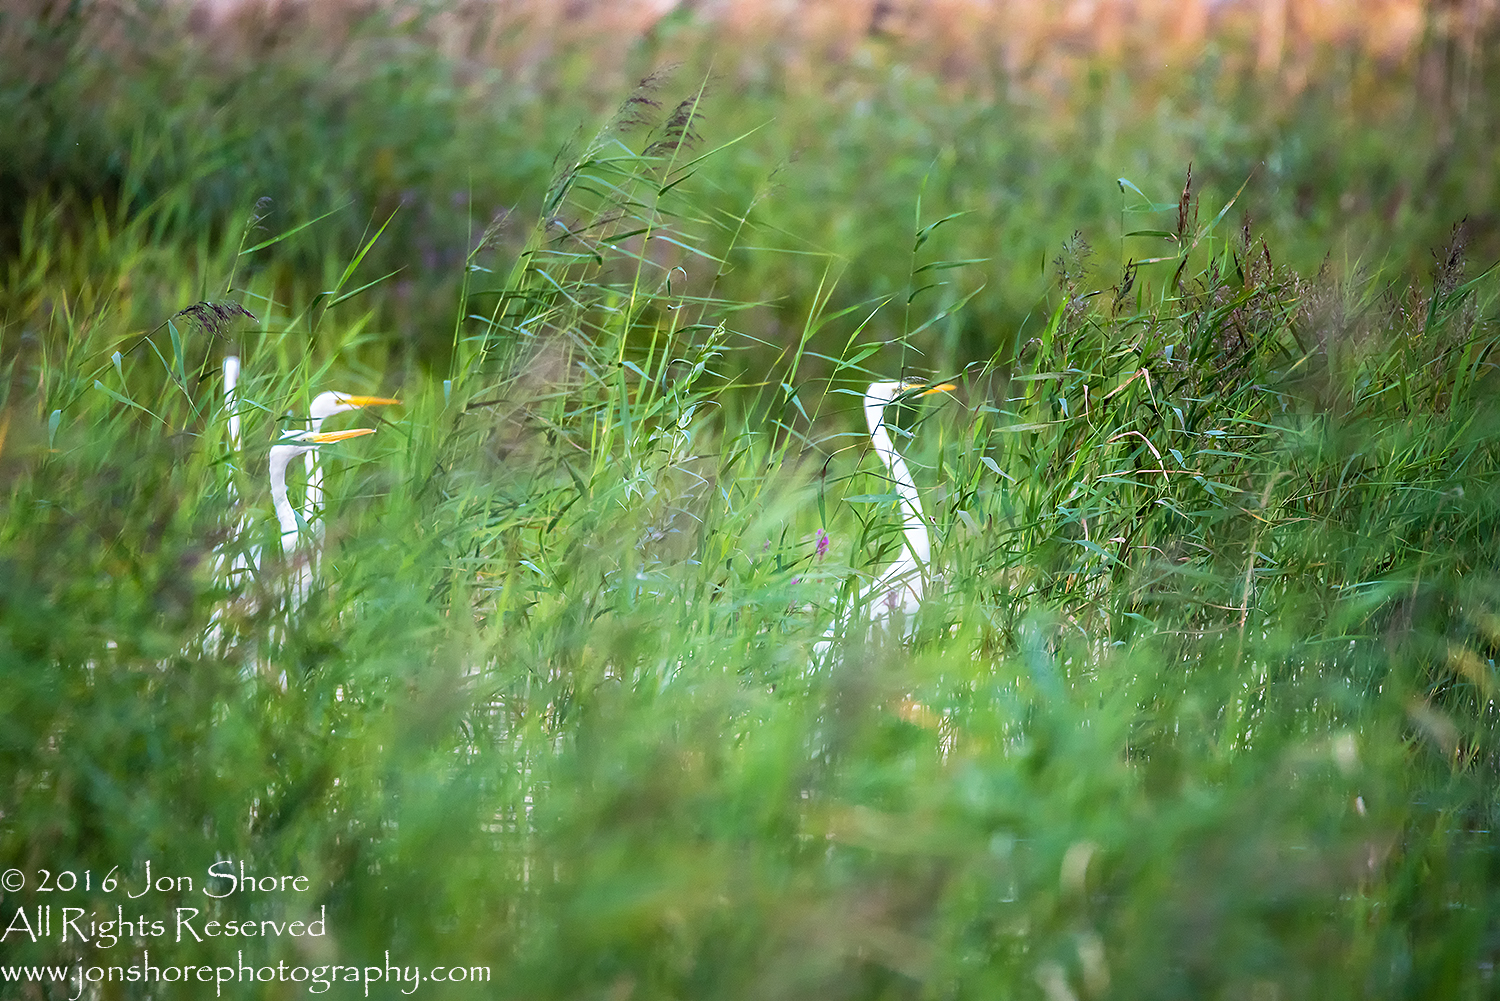 Great White Egrets in the Grass - Summer - Burtnieks, Latvia Tamron 600mm Lens